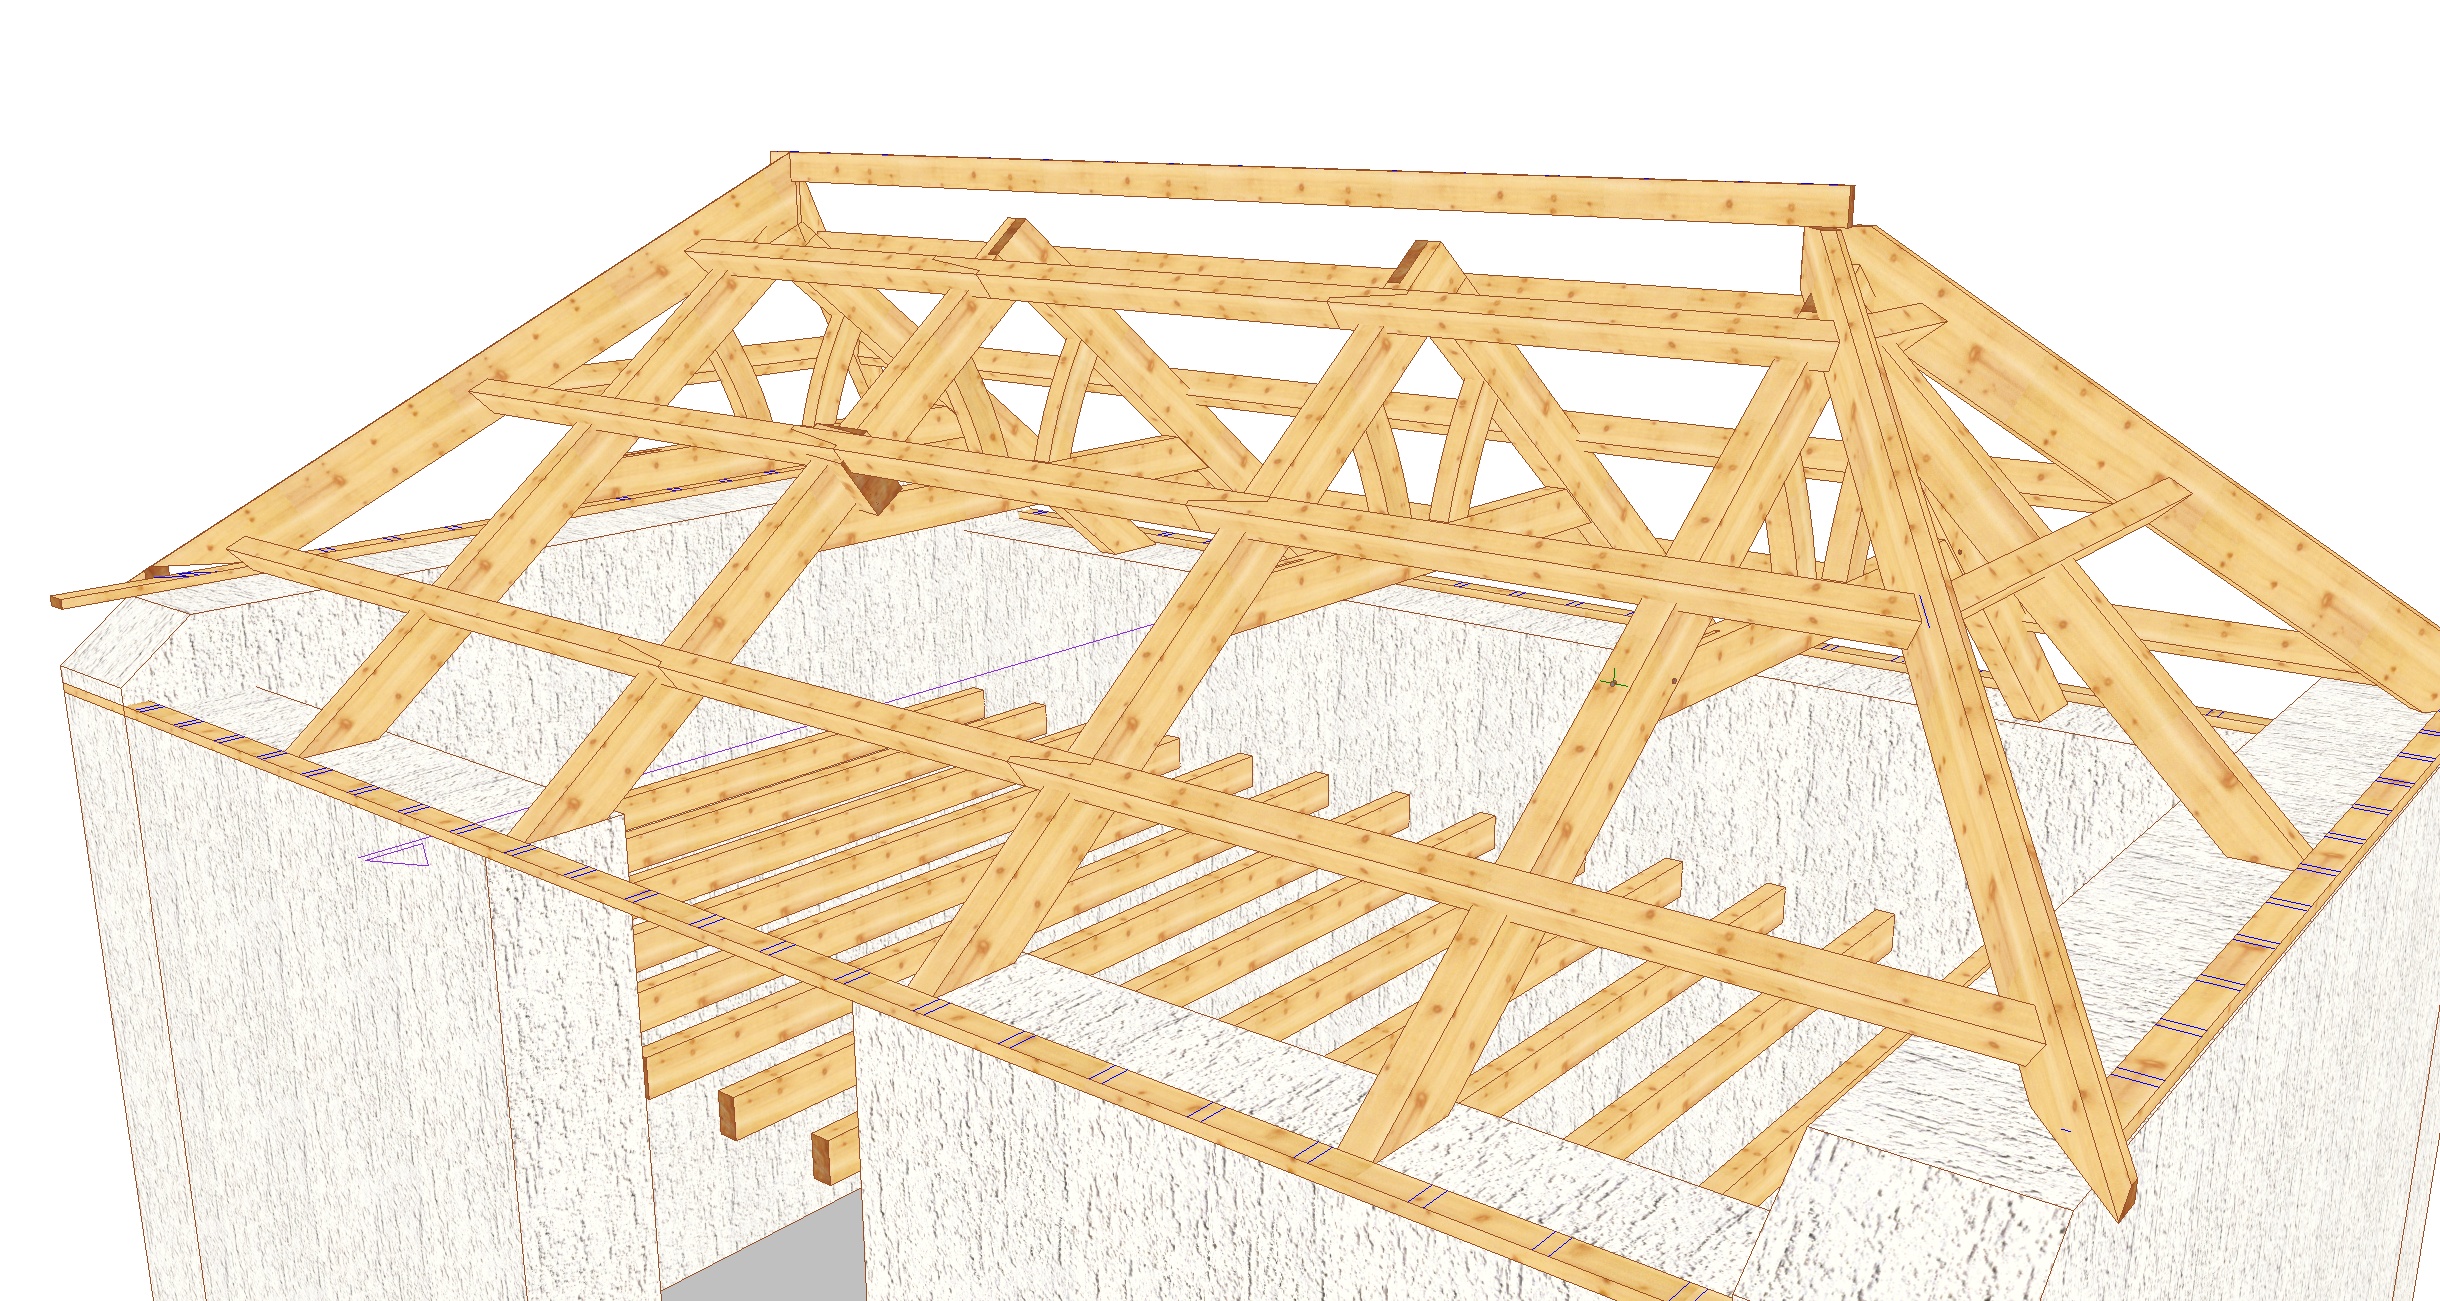 3D CAD CAM timber design